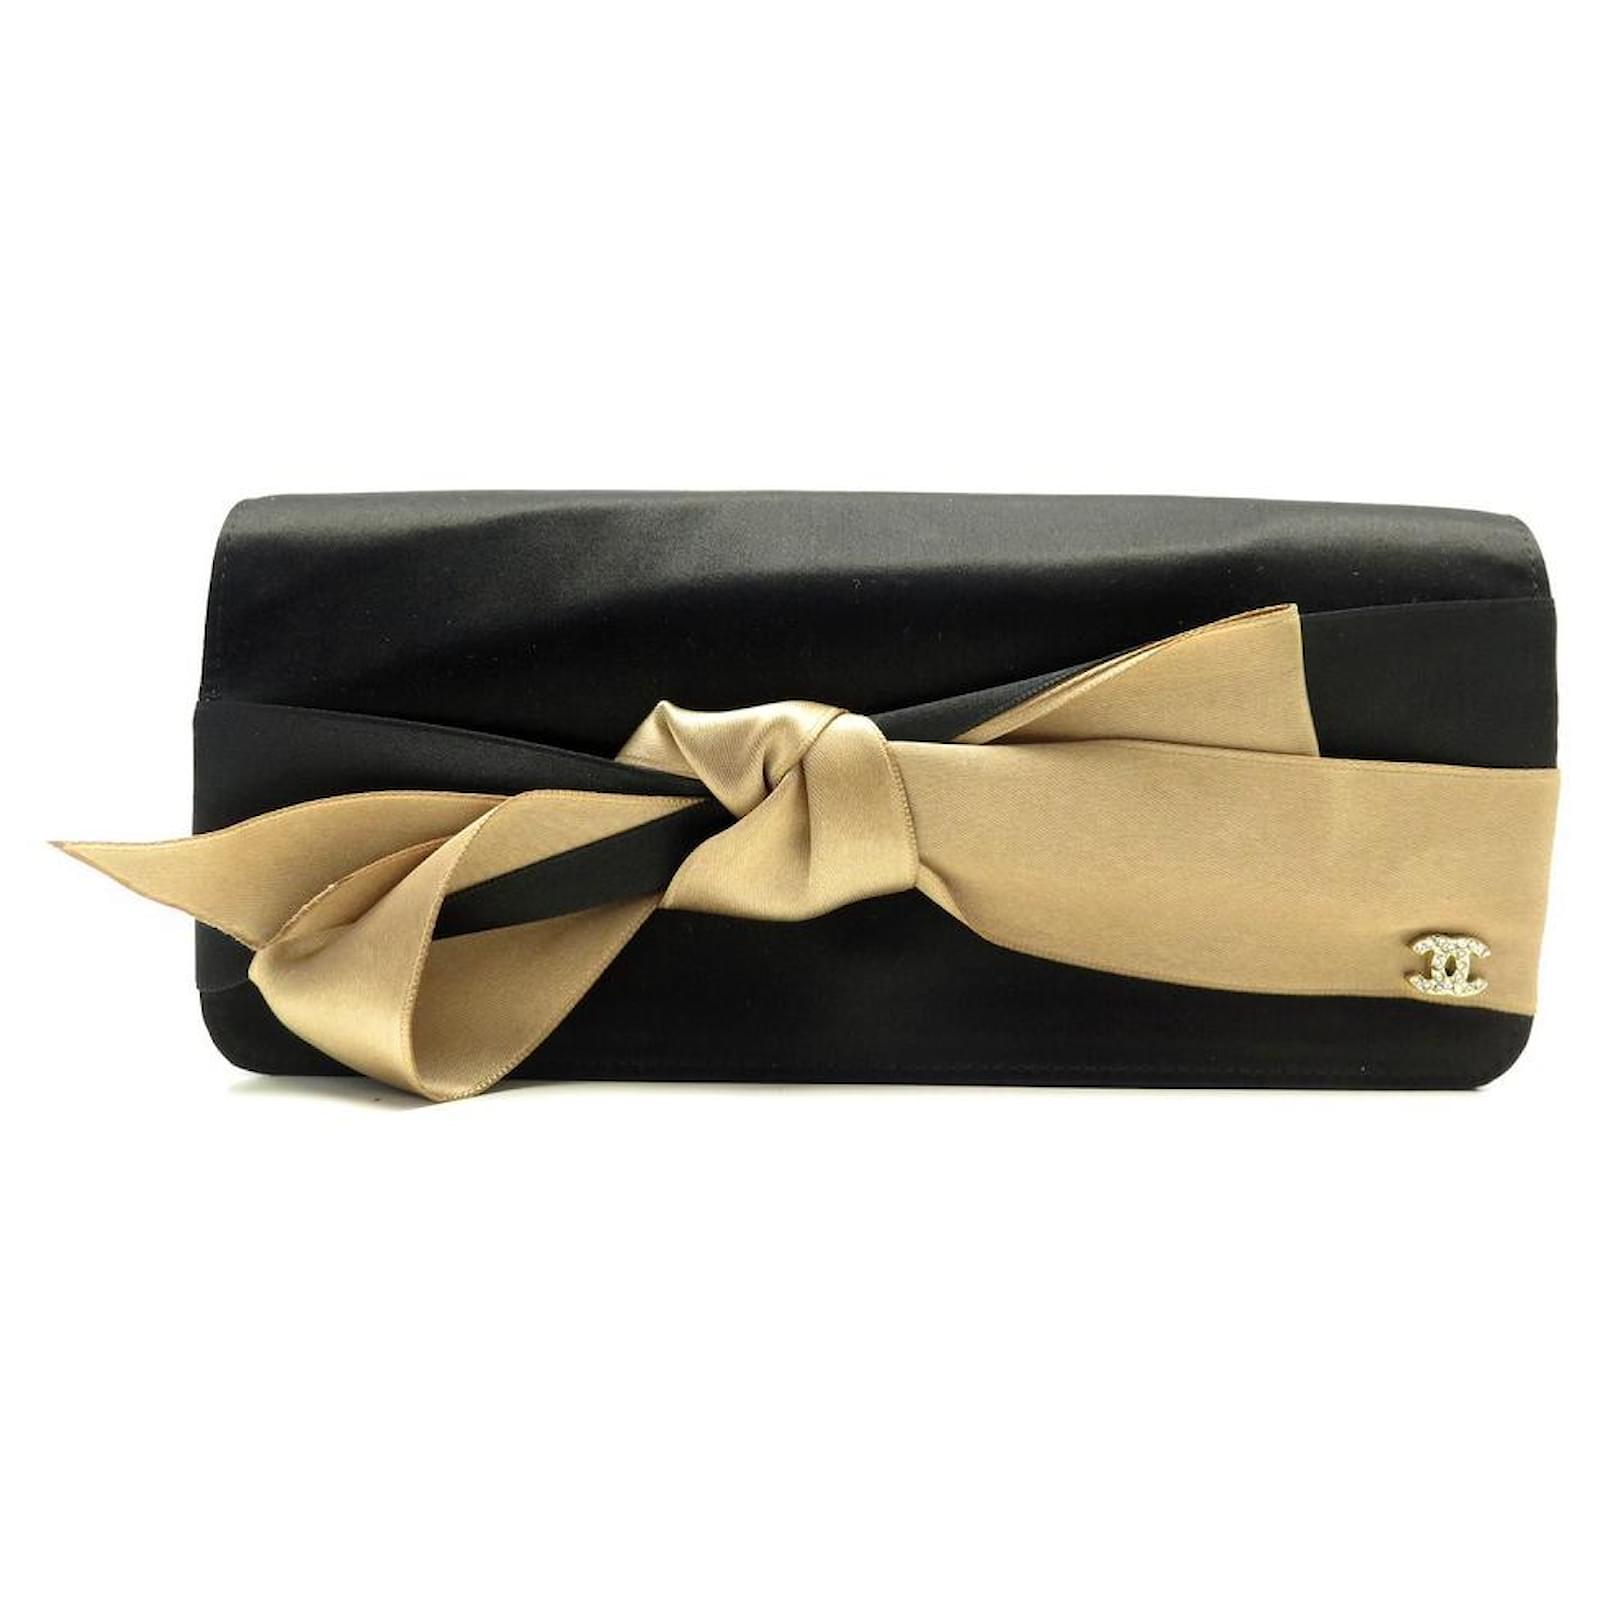 Handbags Chanel New Chanel Bow Pouch Handbag in Black & Gold Satin Clutch Bag